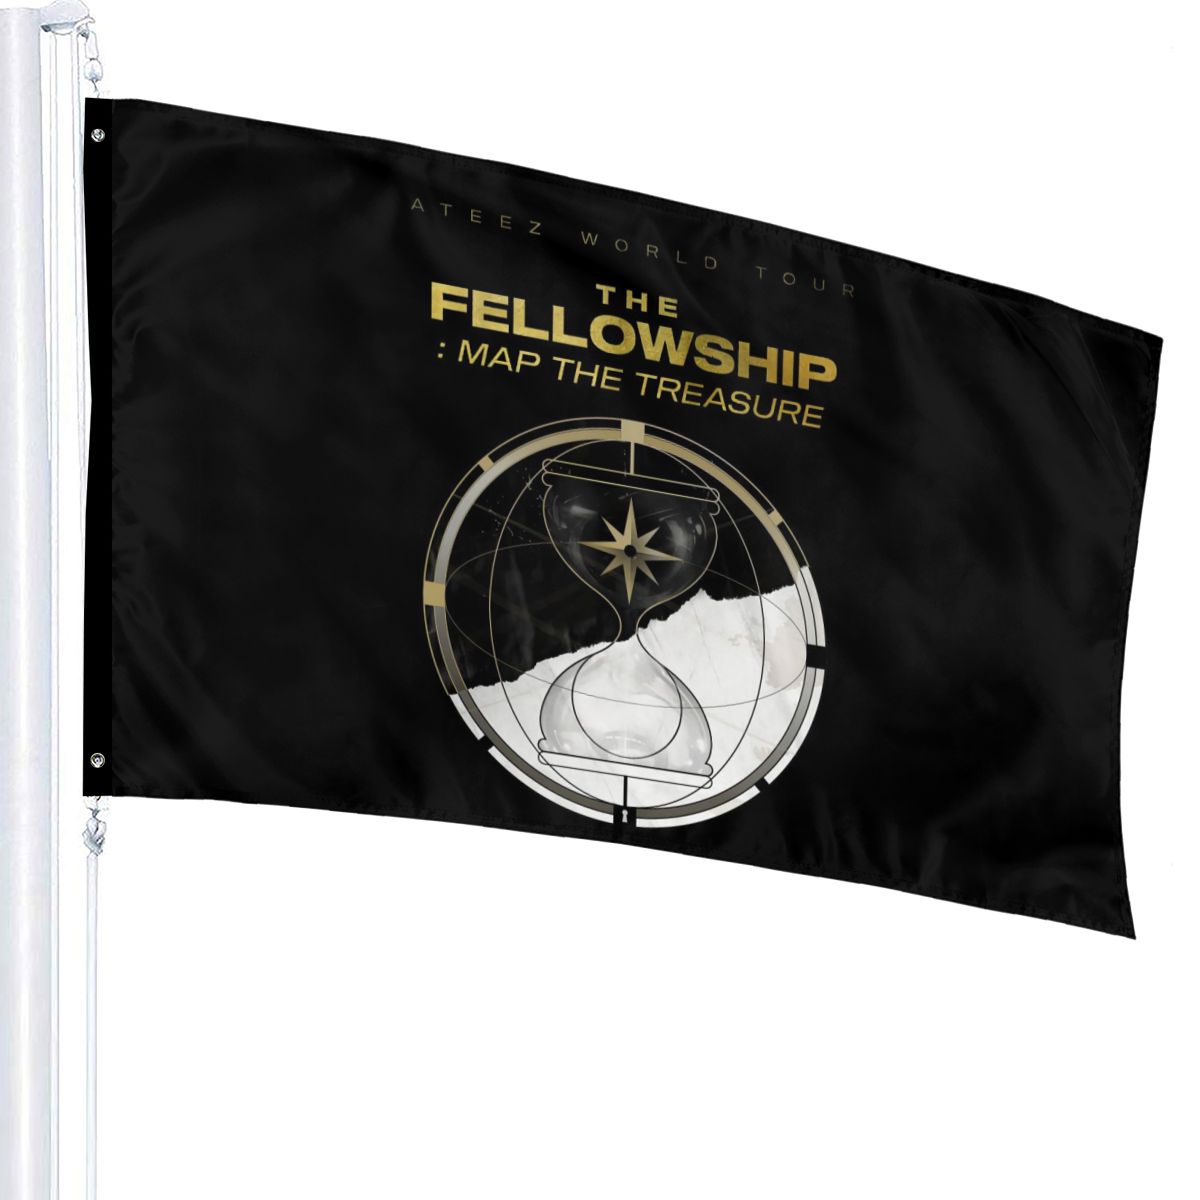 Ateez Kpop The Fellowship Map The Treasure Tour 2020 Concert Merch Atmungsaktives S 5Xl Headban Spring 1 - Ateez Store